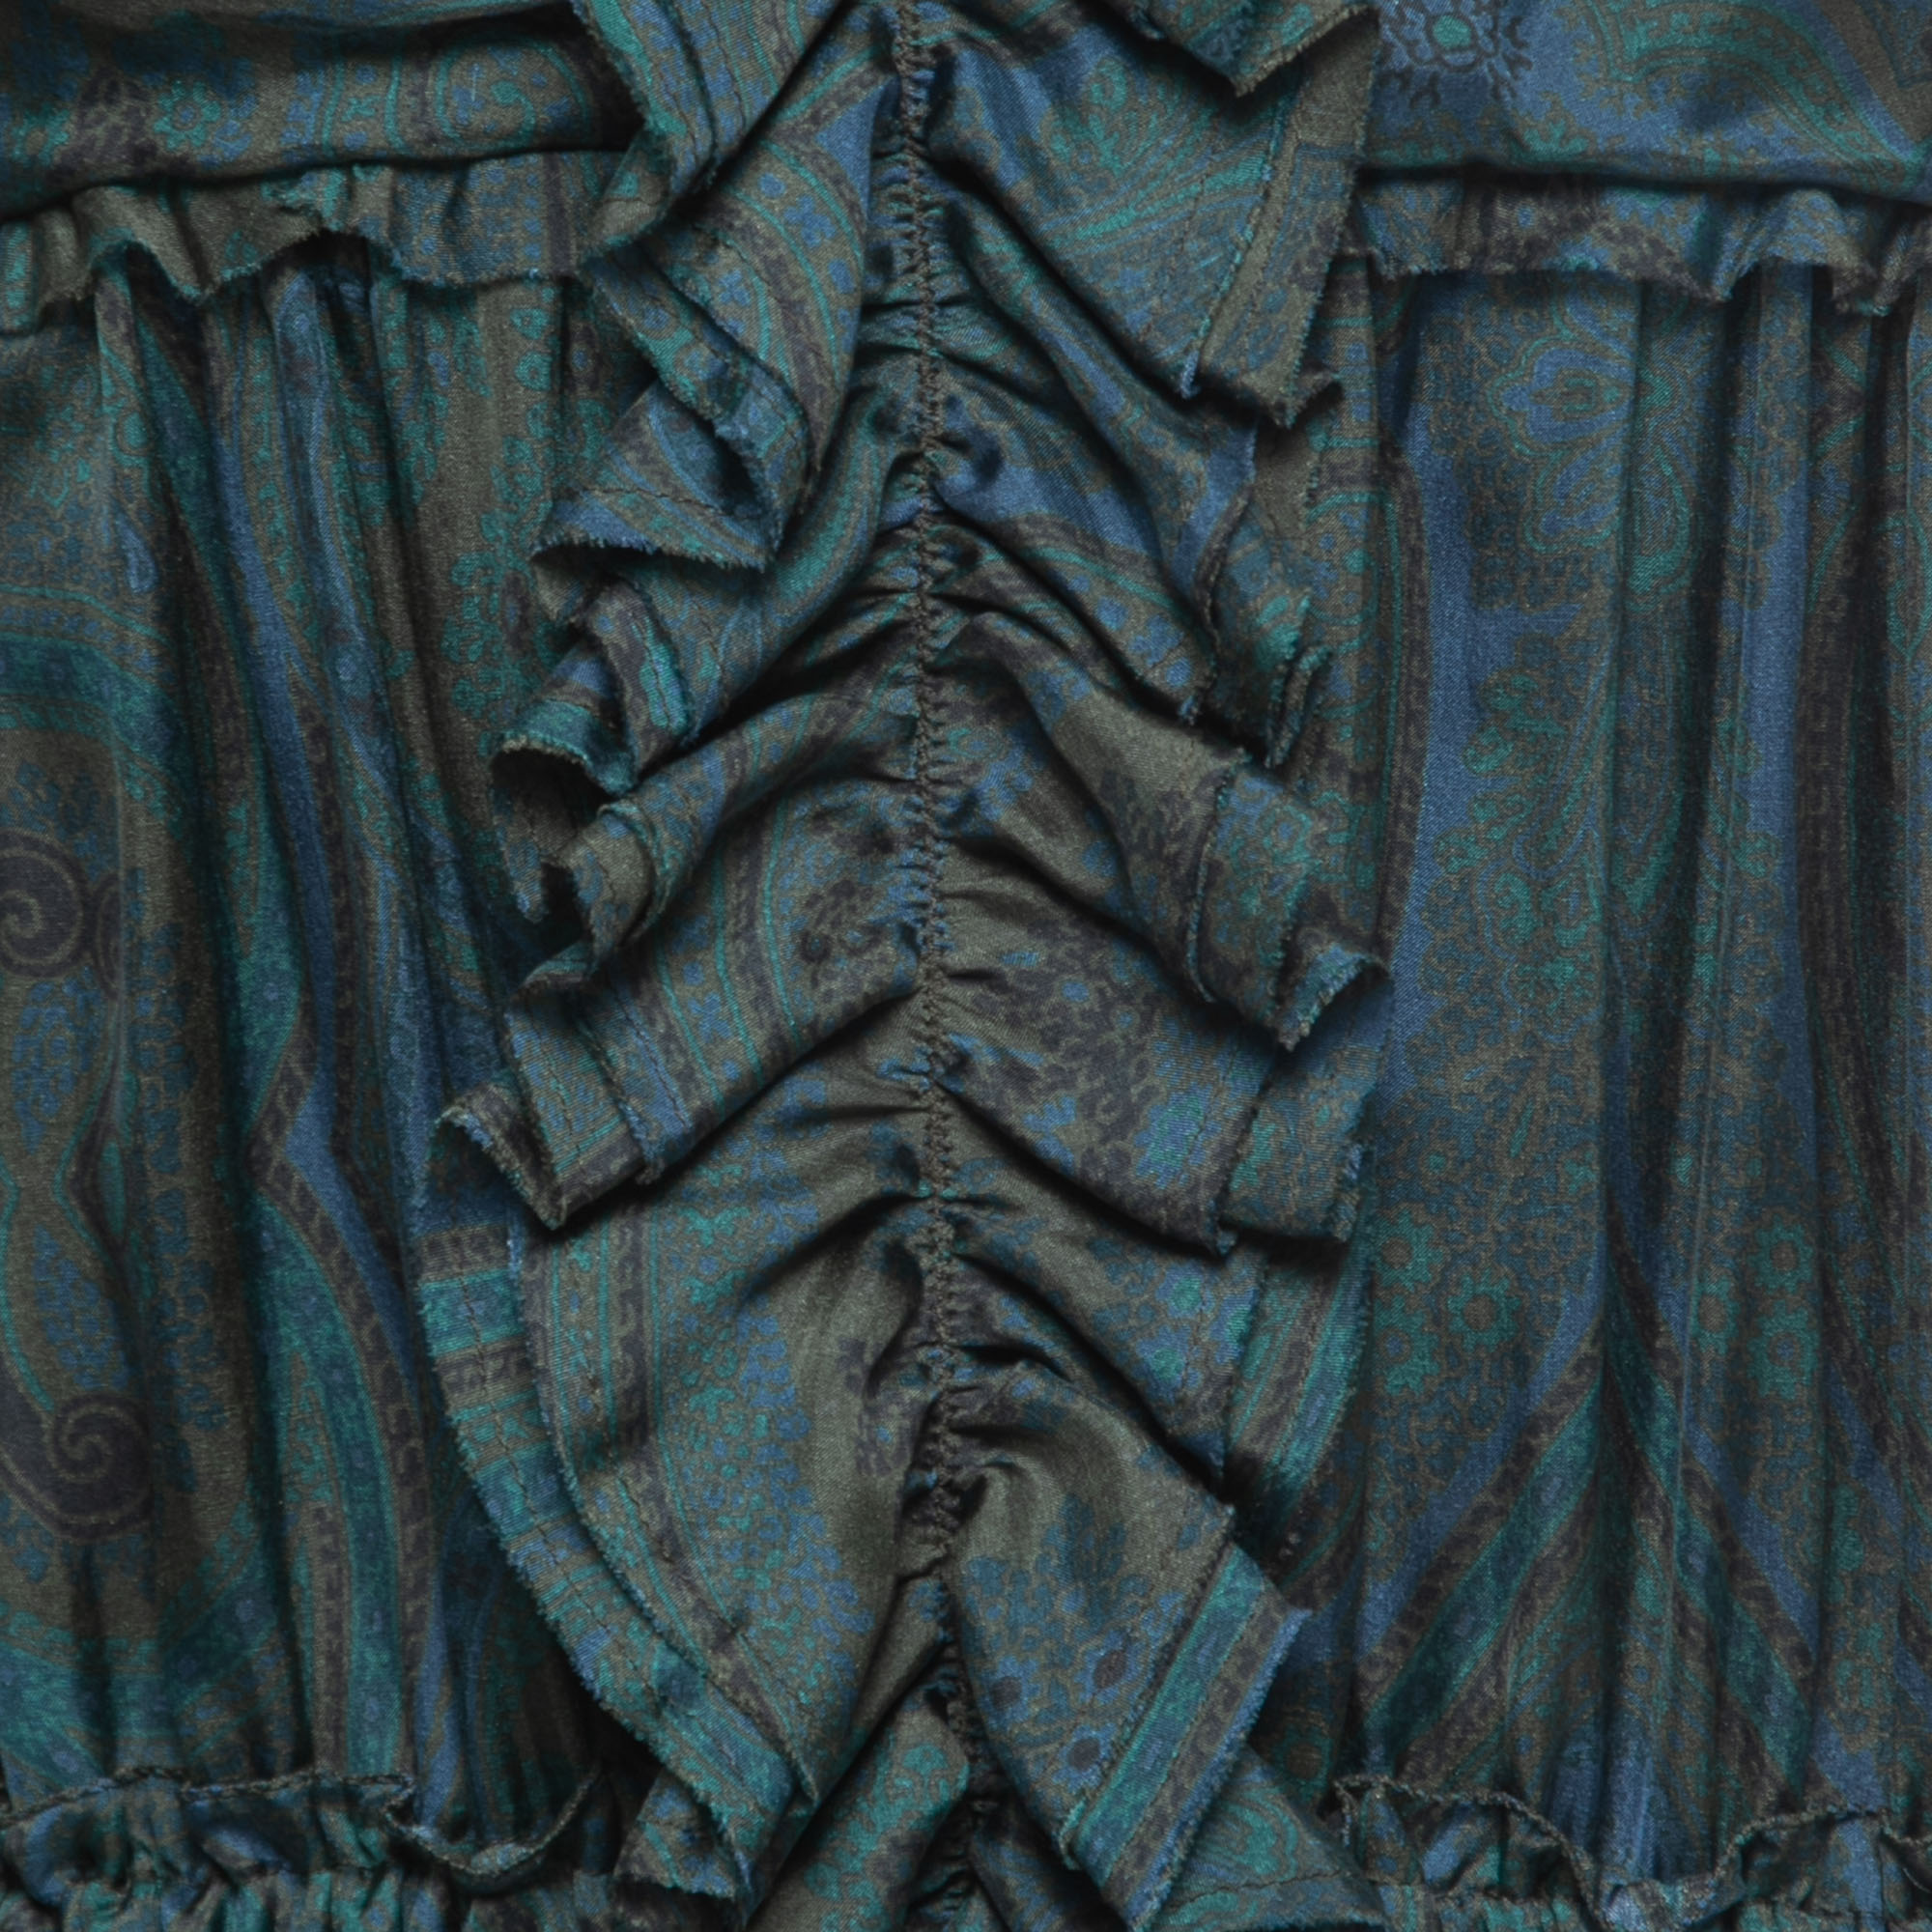 D&G Green/Blue Paisley Printed Silk Chiffon Ruffled Midi Dress M